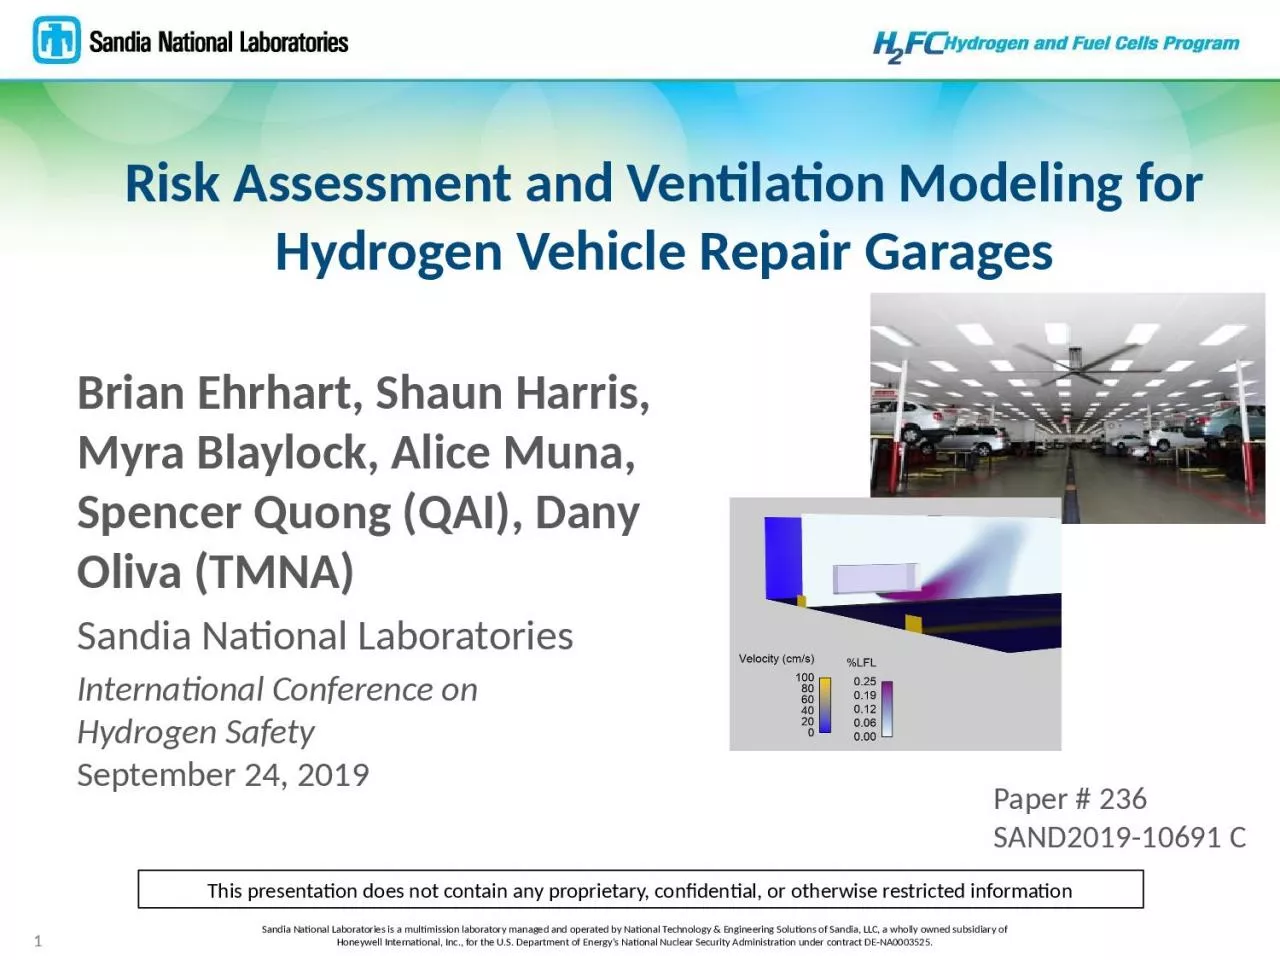 Risk Assessment and Ventilation Modeling for Hydrogen Vehicle Repair Garages